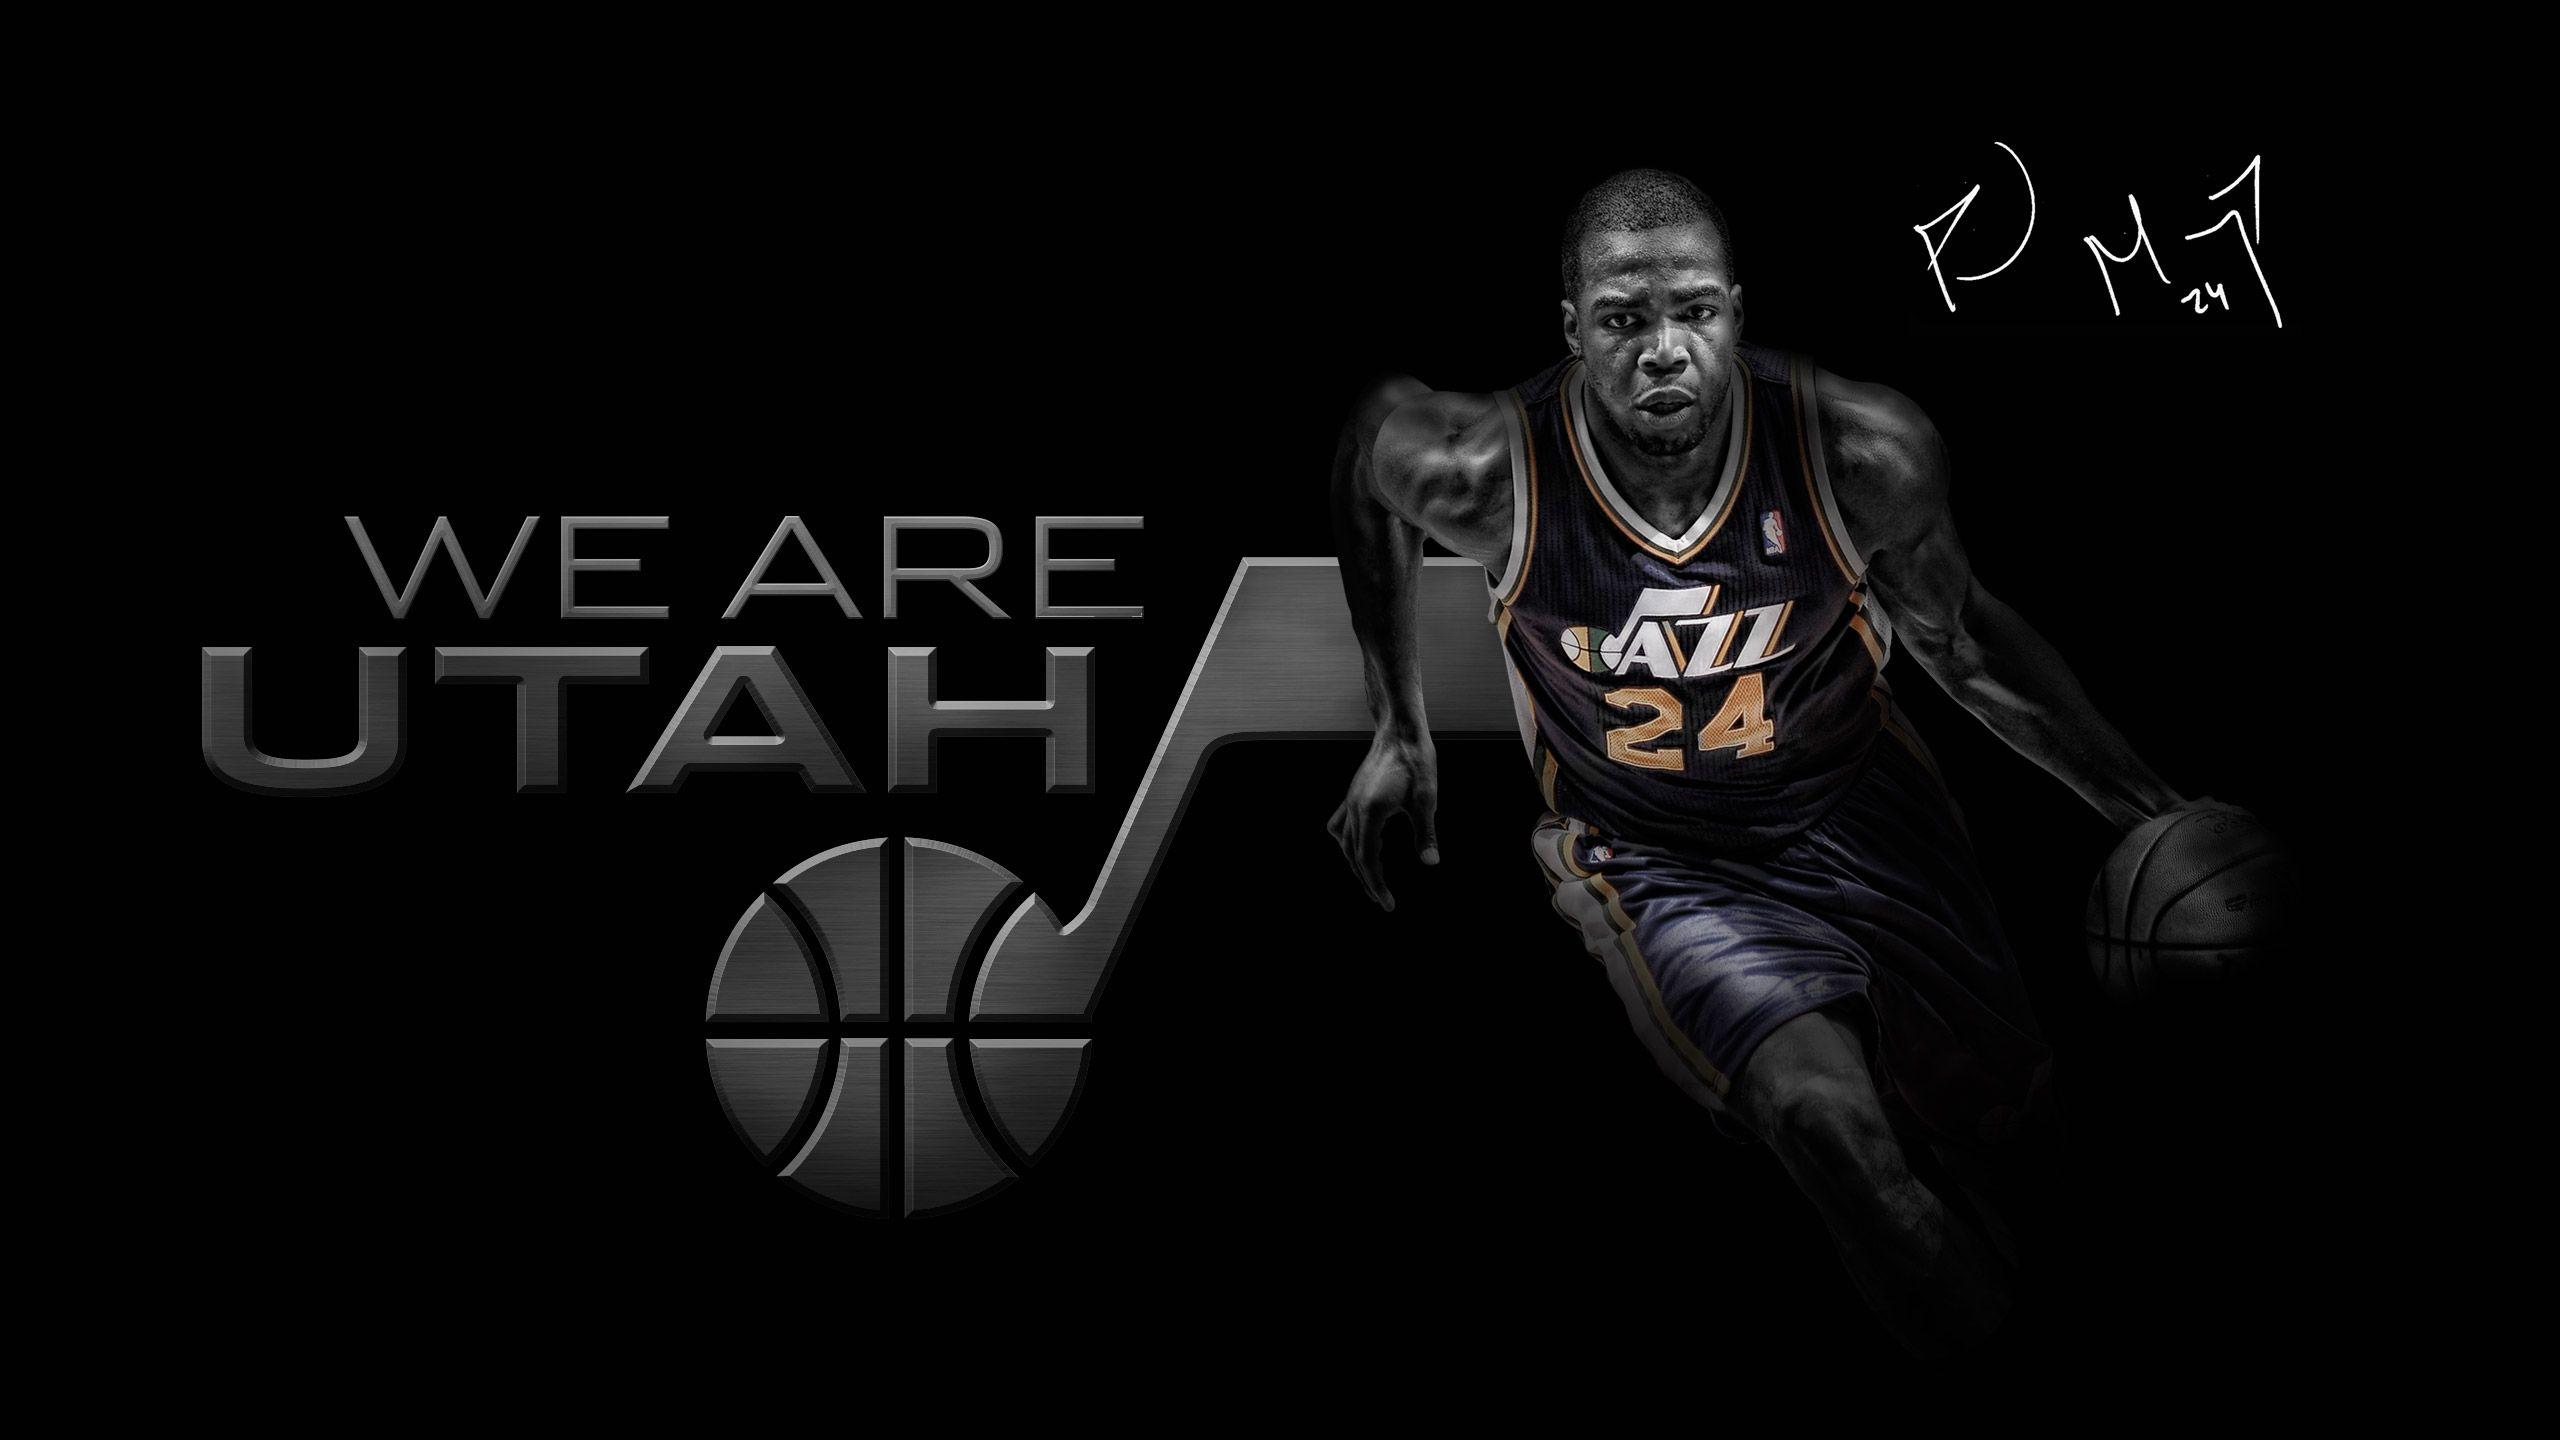 Utah Jazz. We Are Utah, Paul Millsap. Jazz basketball